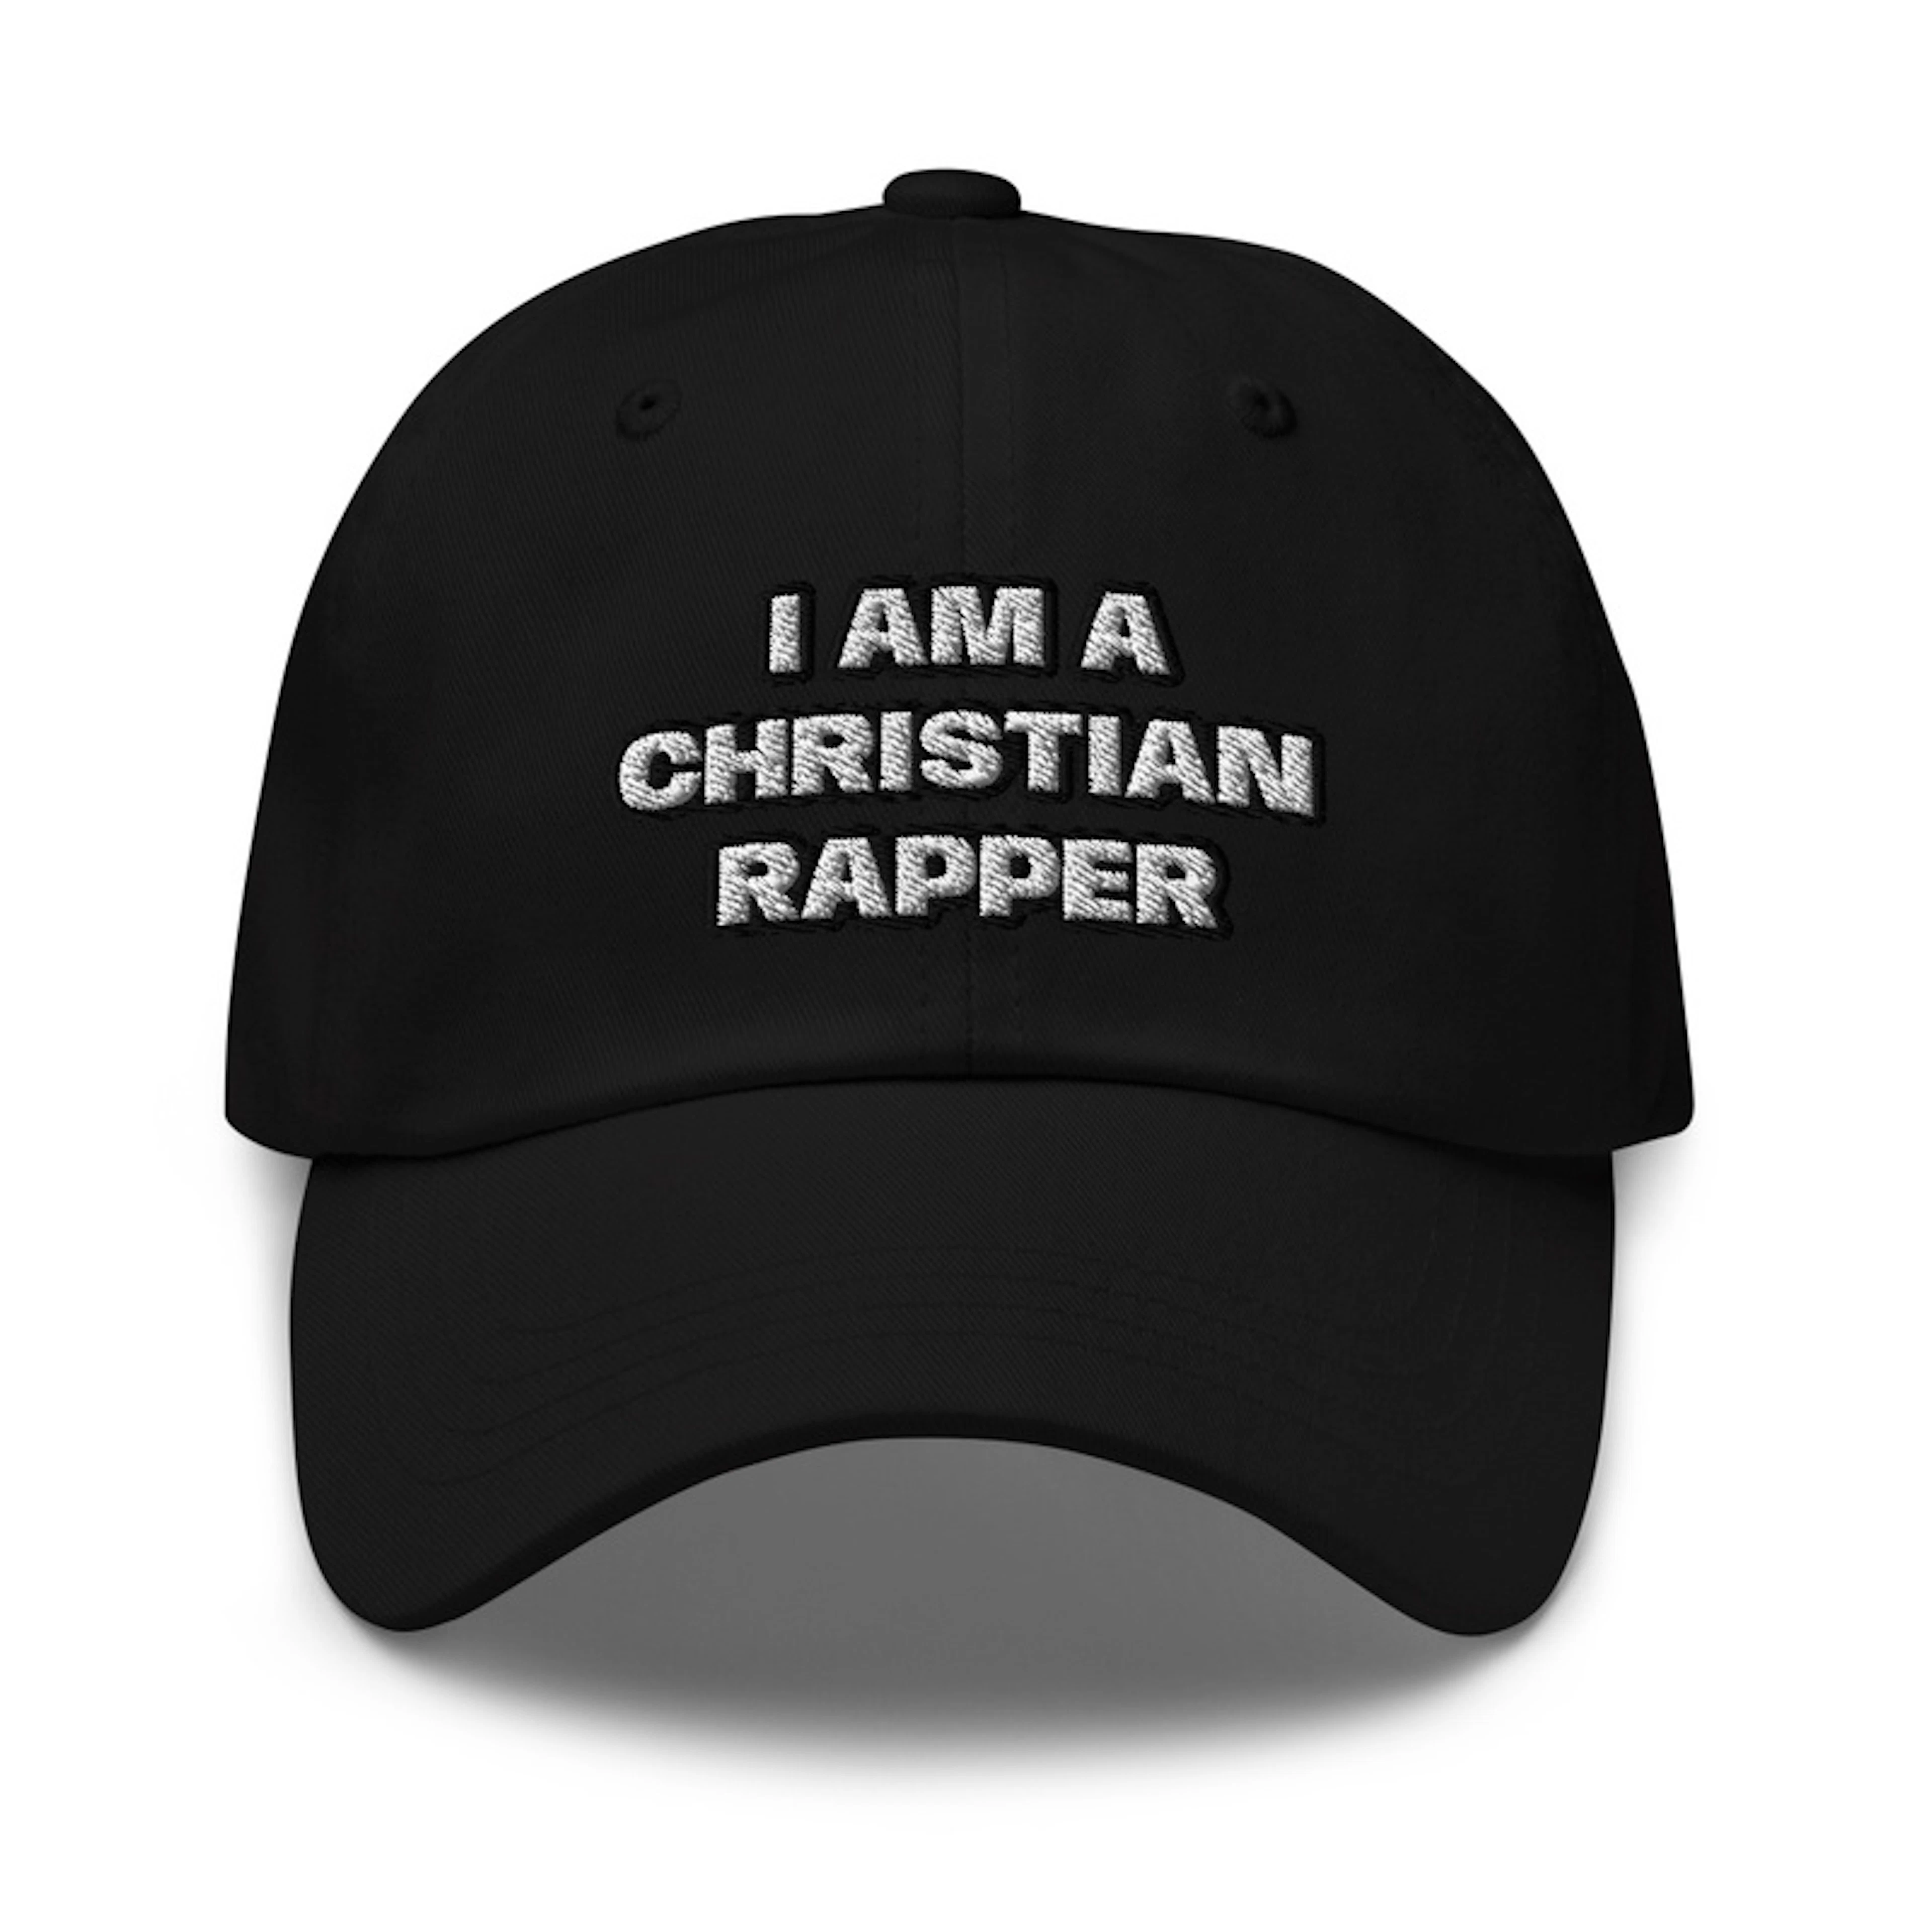 I AM A CHRISTIAN RAPPER